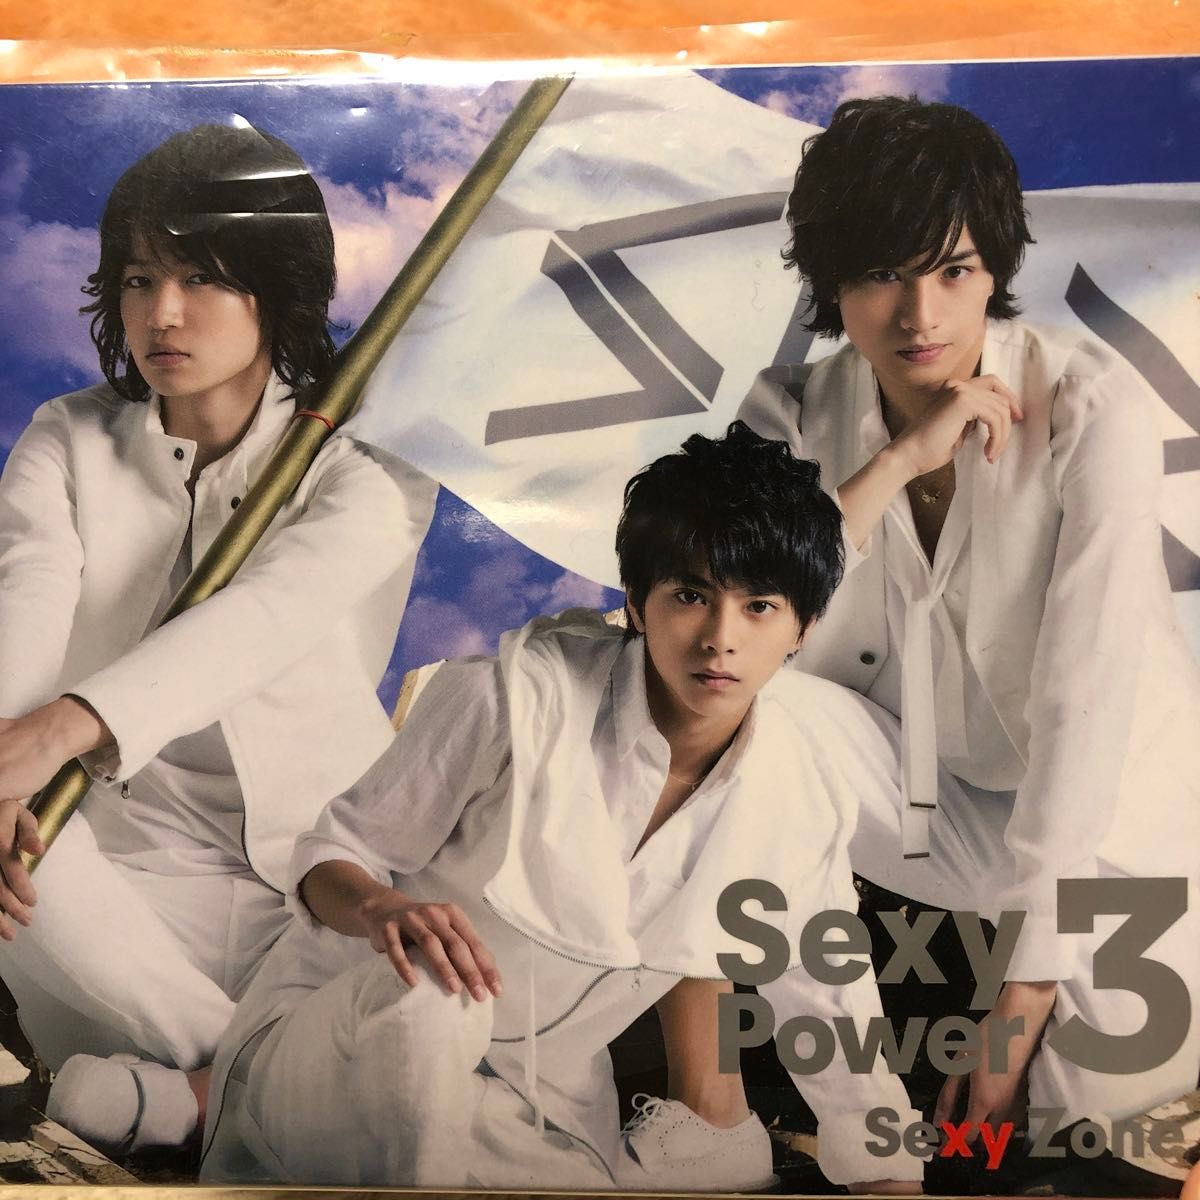 Sexy Power3 (初回限定盤A) (DVD付) (初回限定盤B) (DVD付) の2点セット